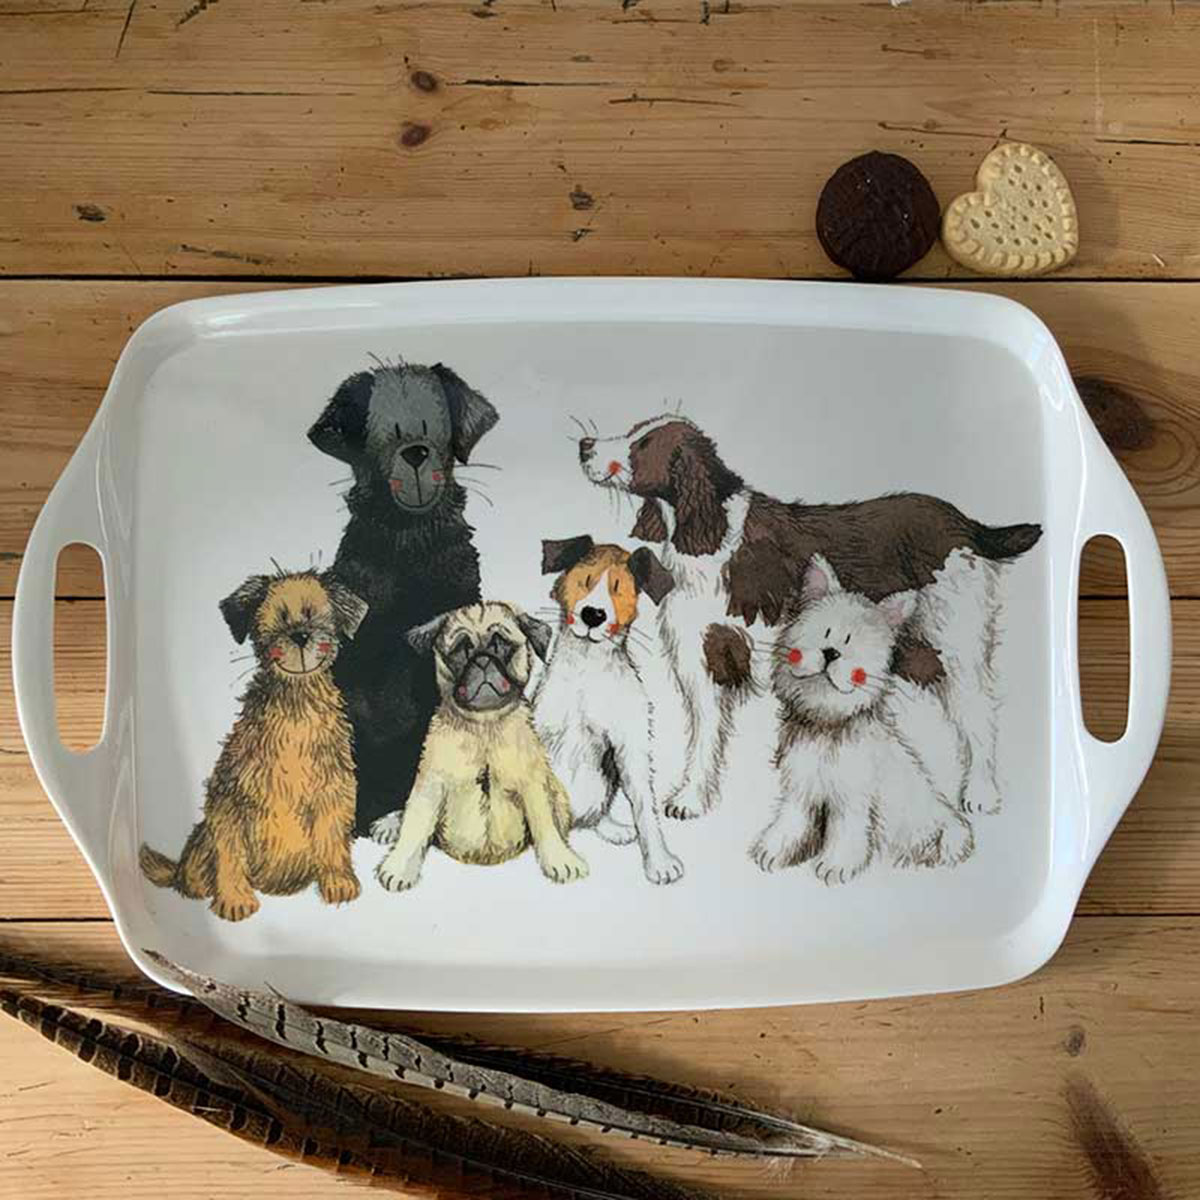 Delightful Dogs melamine tray by Alex Clark